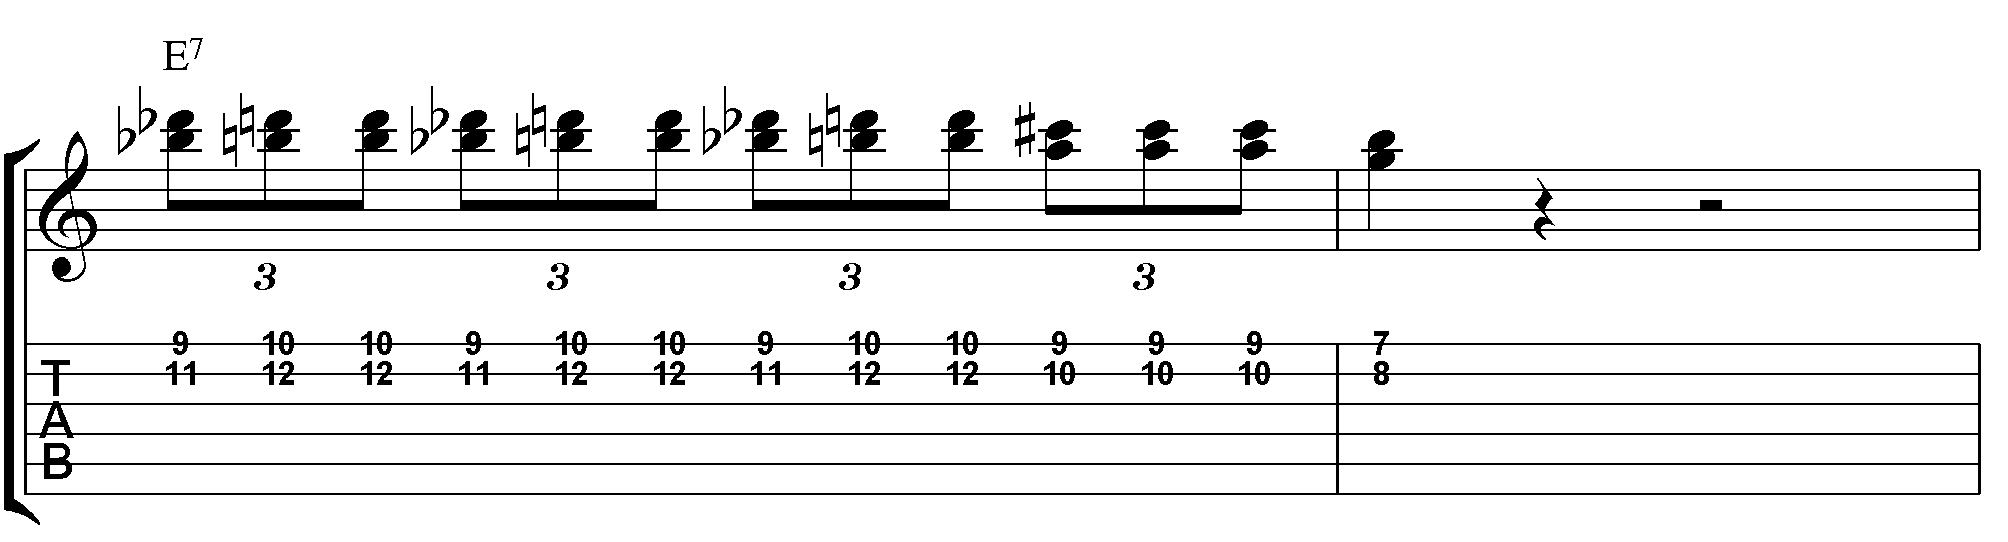 Major and Minor Blues Scales – Guitar Tab and Essential Licks - Matt